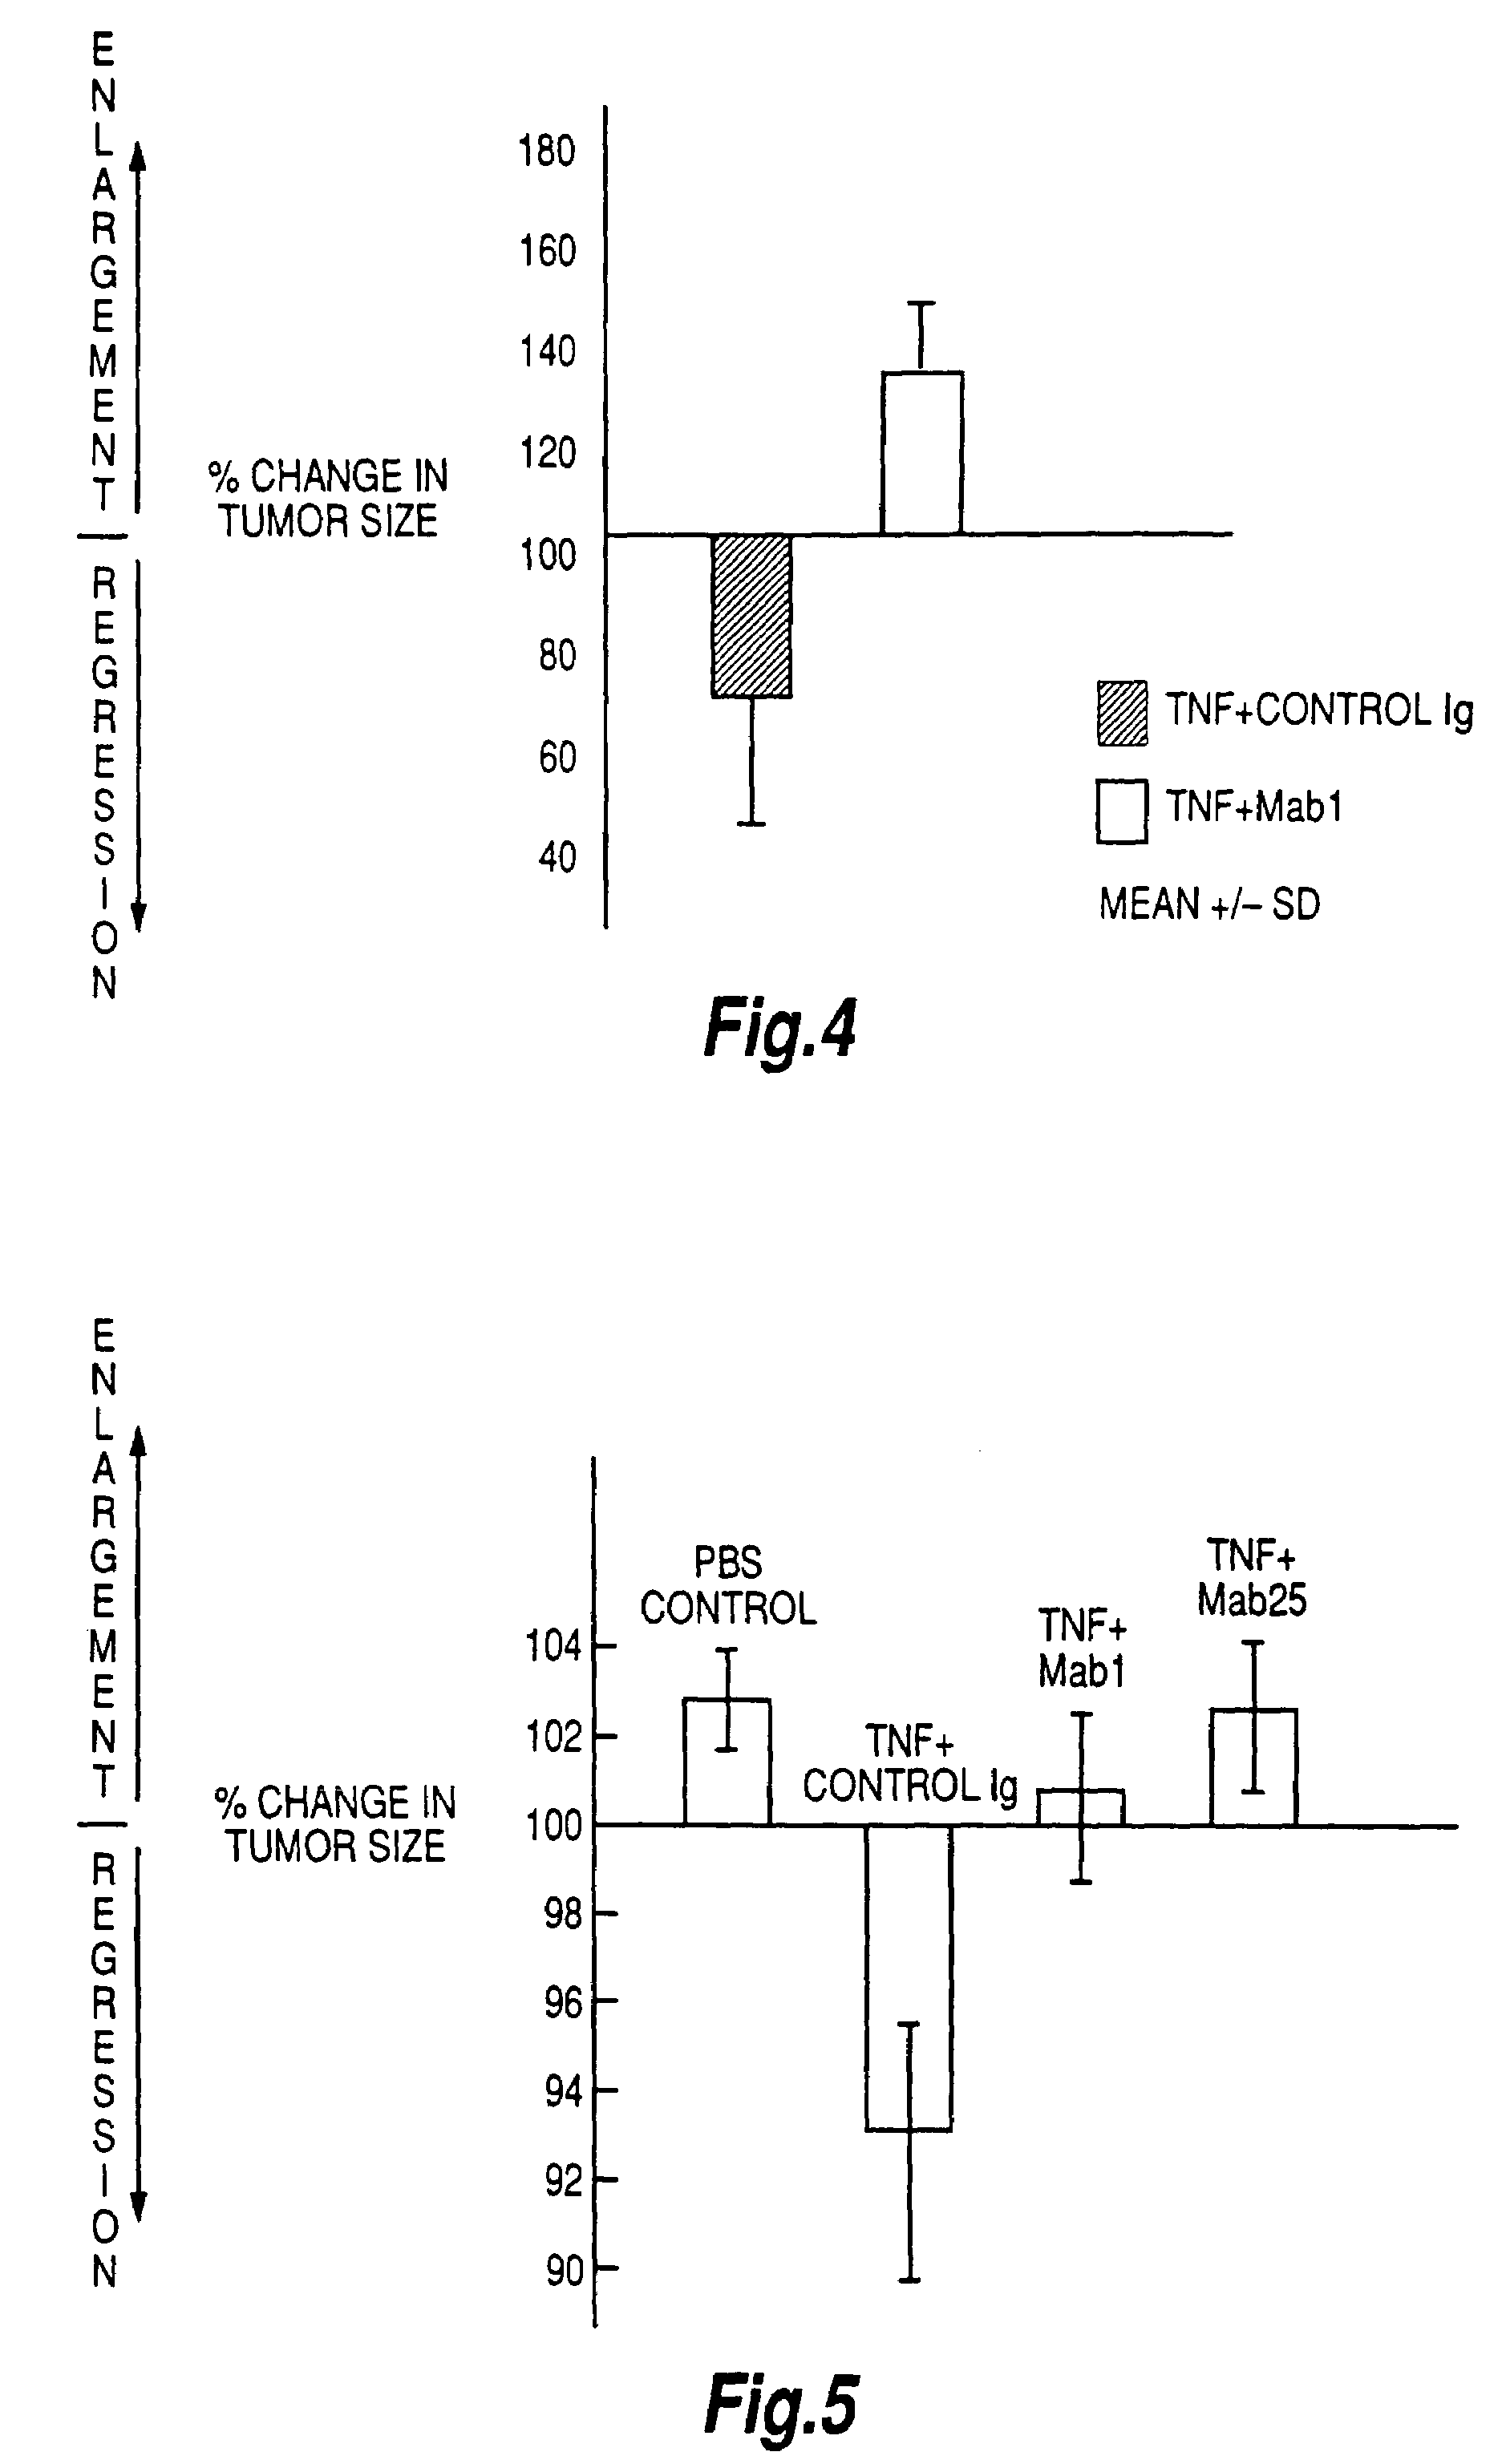 Tumour necrosis factor binding ligands